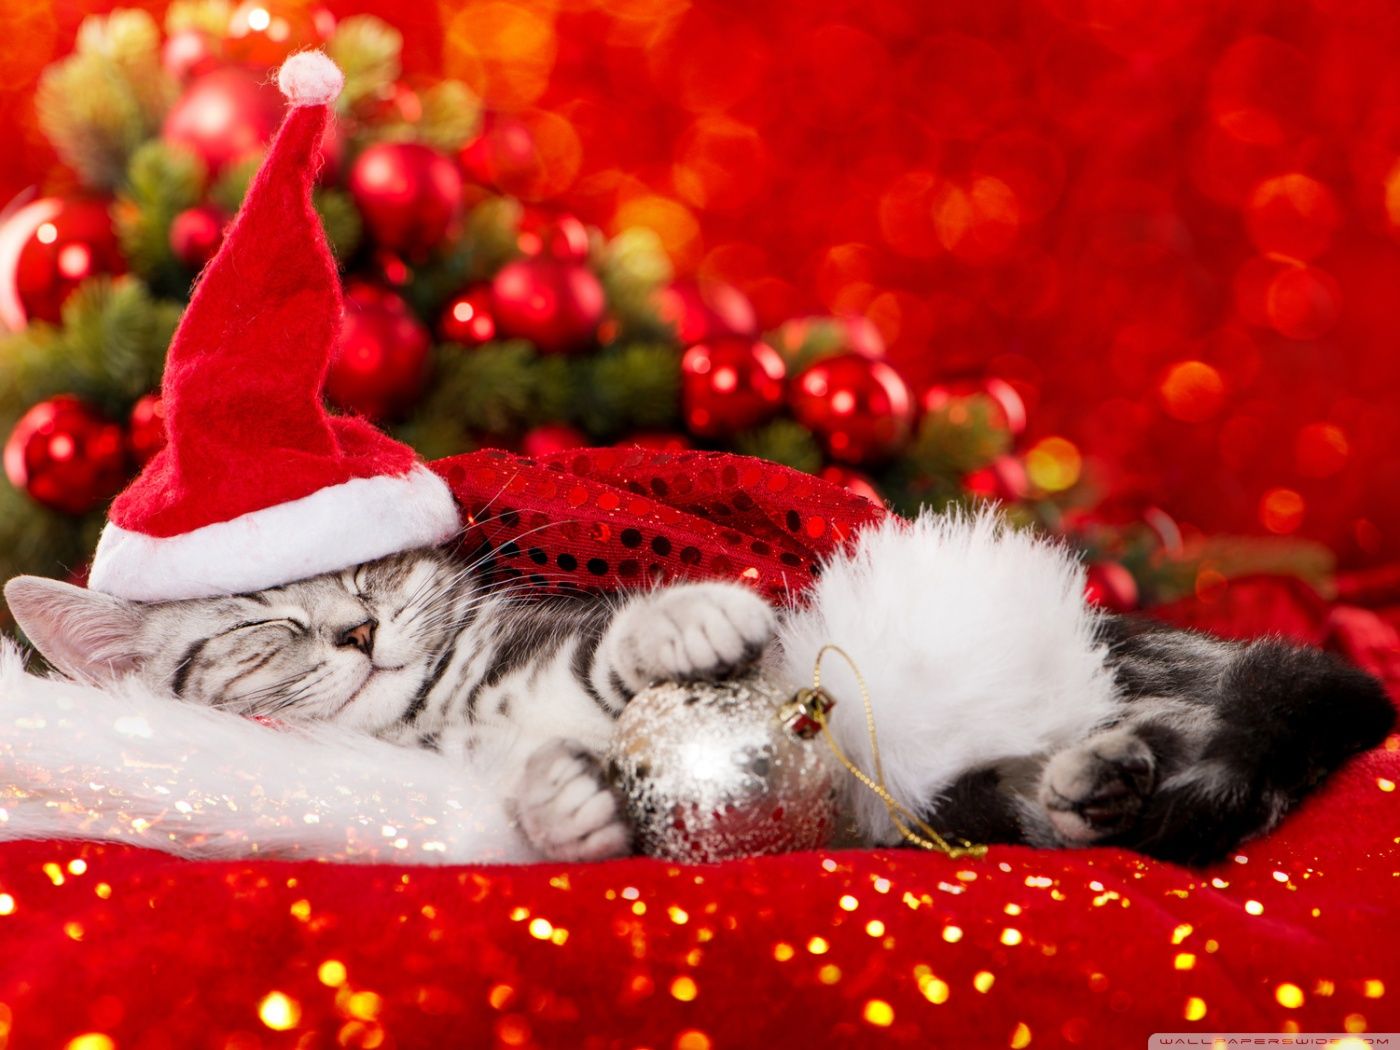 Really cute Christmas kitten Ultra HD Desktop Background Wallpaper for 4K UHD TV, Widescreen & UltraWide Desktop & Laptop, Tablet